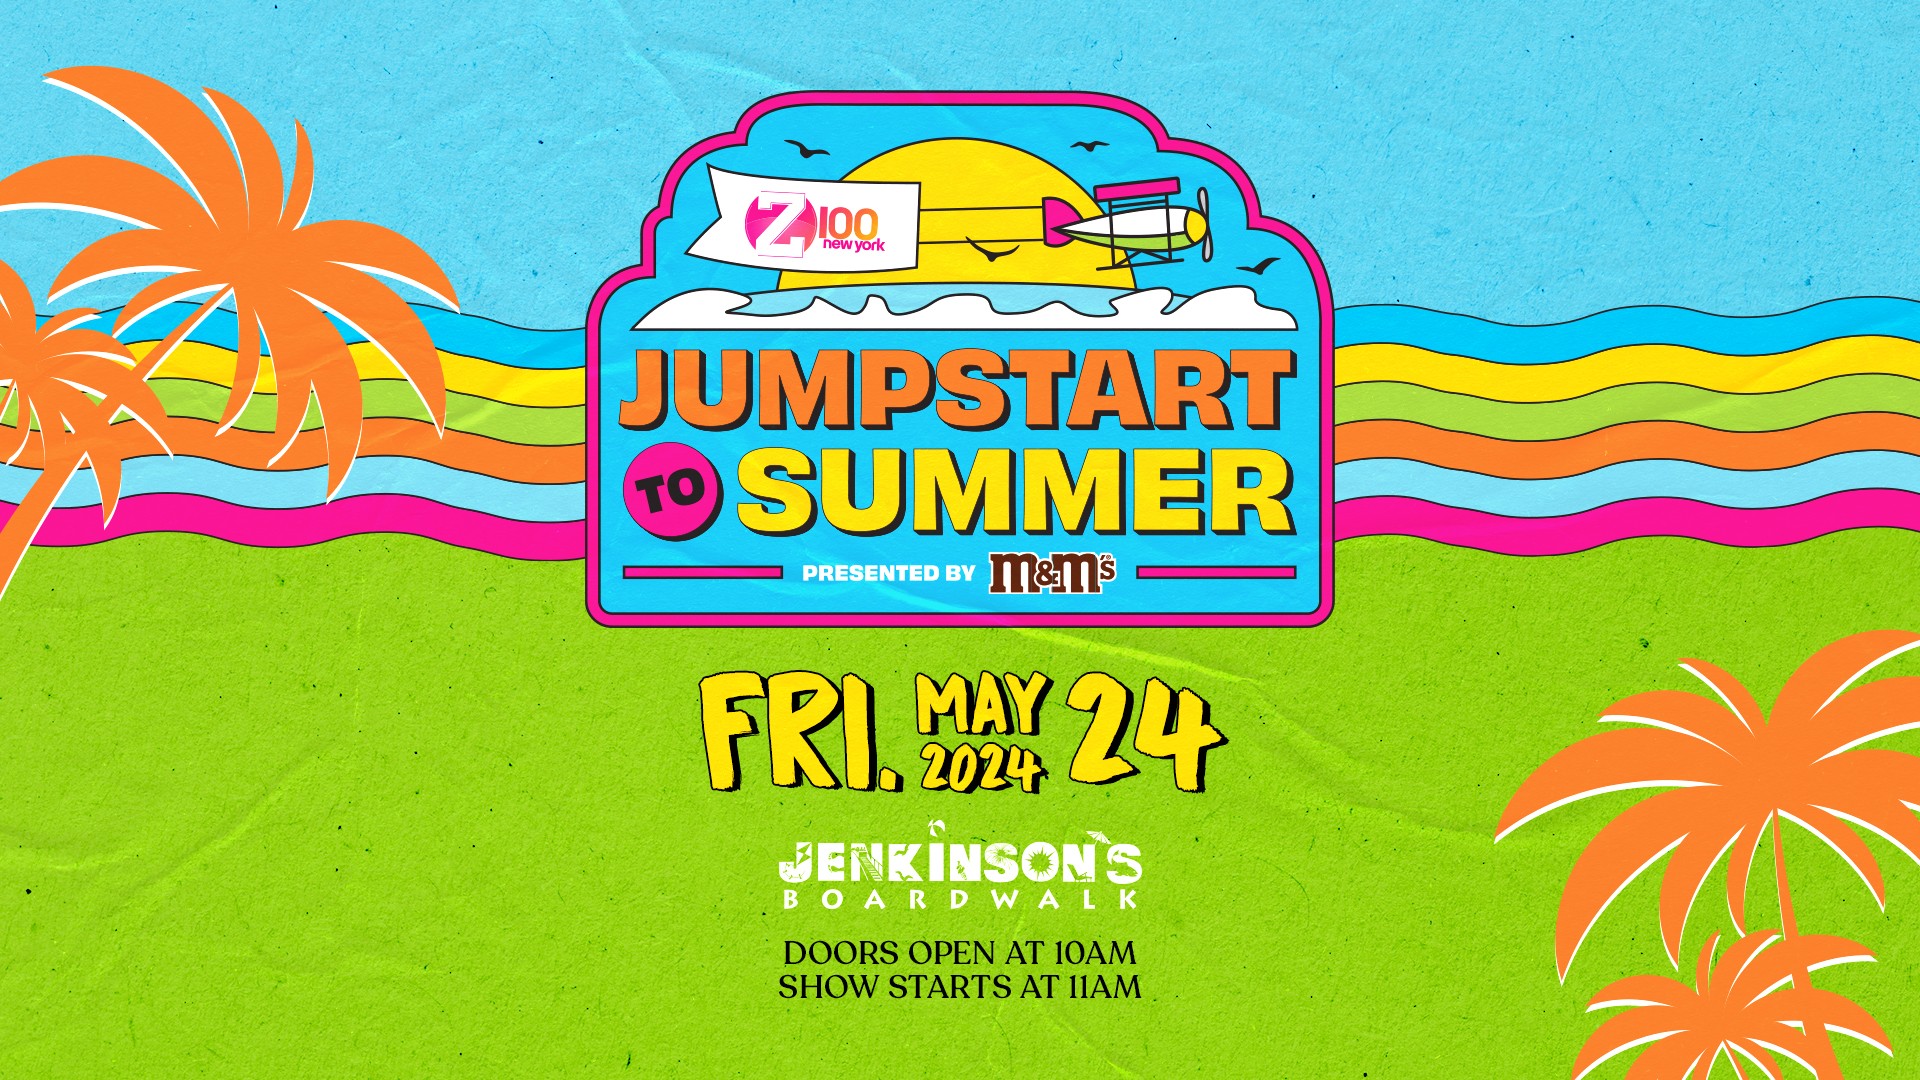 z100 jumpstart to summer concert at jenkinson's boardwalk